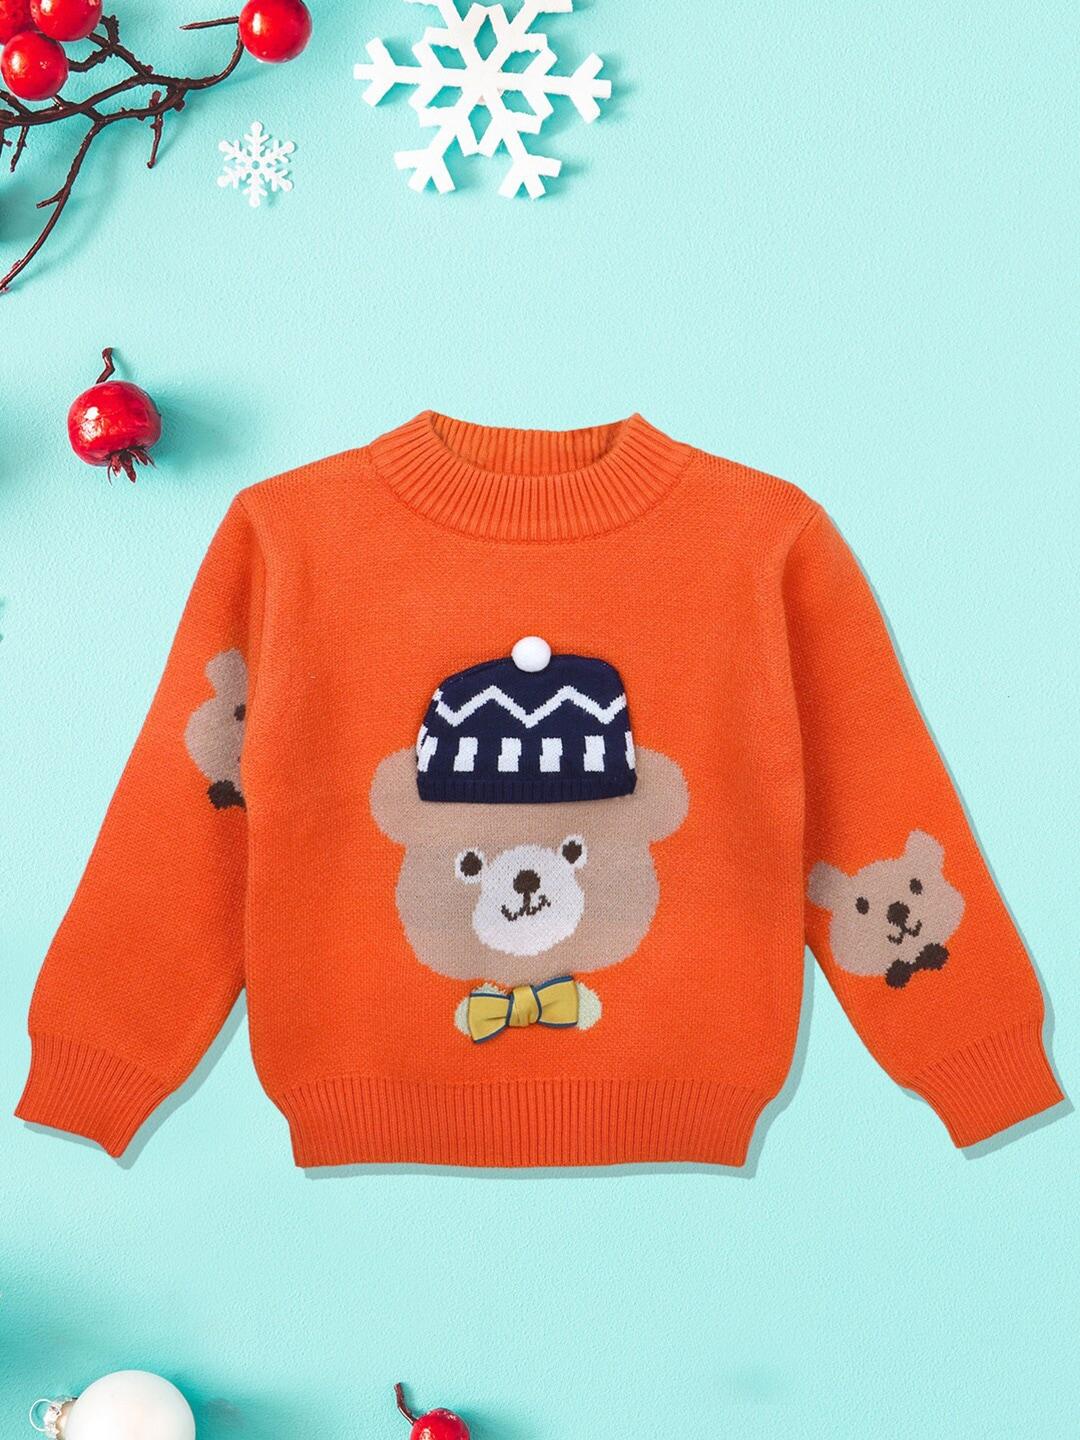 Baby Moo Unisex Kids Orange & Blue Printed Cotton Pullover Sweater